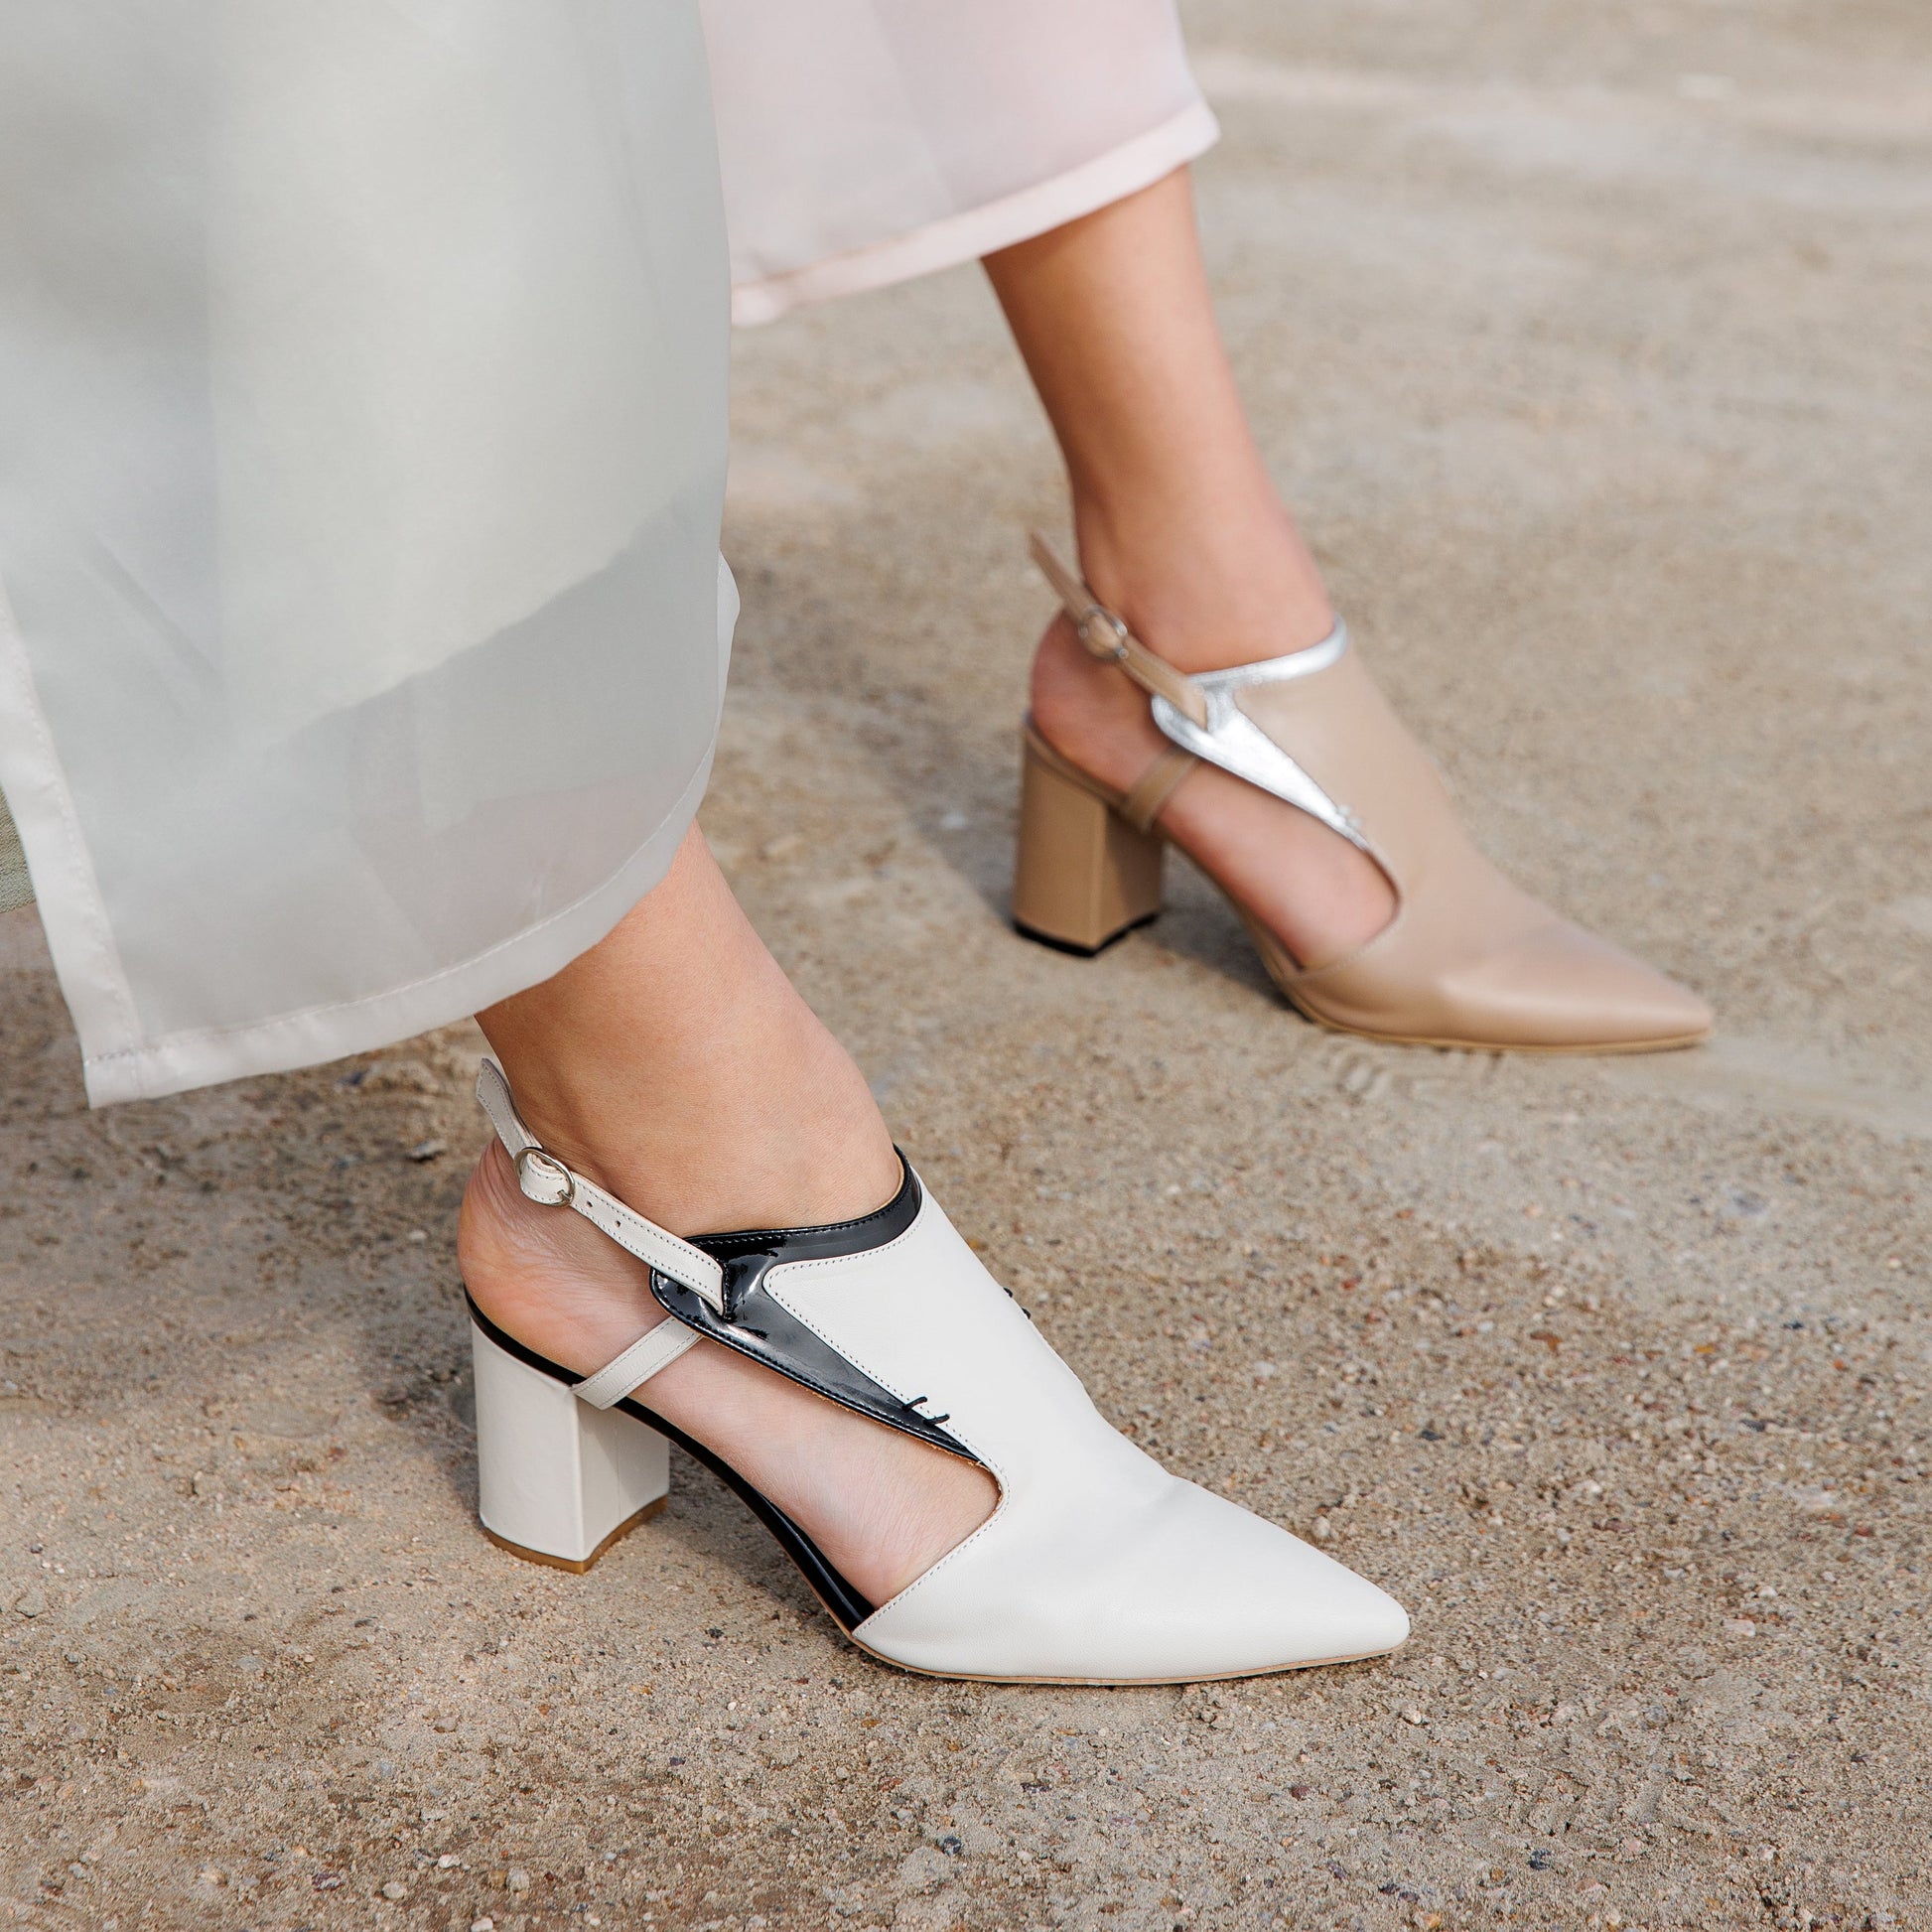 Kadi beige heel- Heels - kuwait - Ksa- shoes